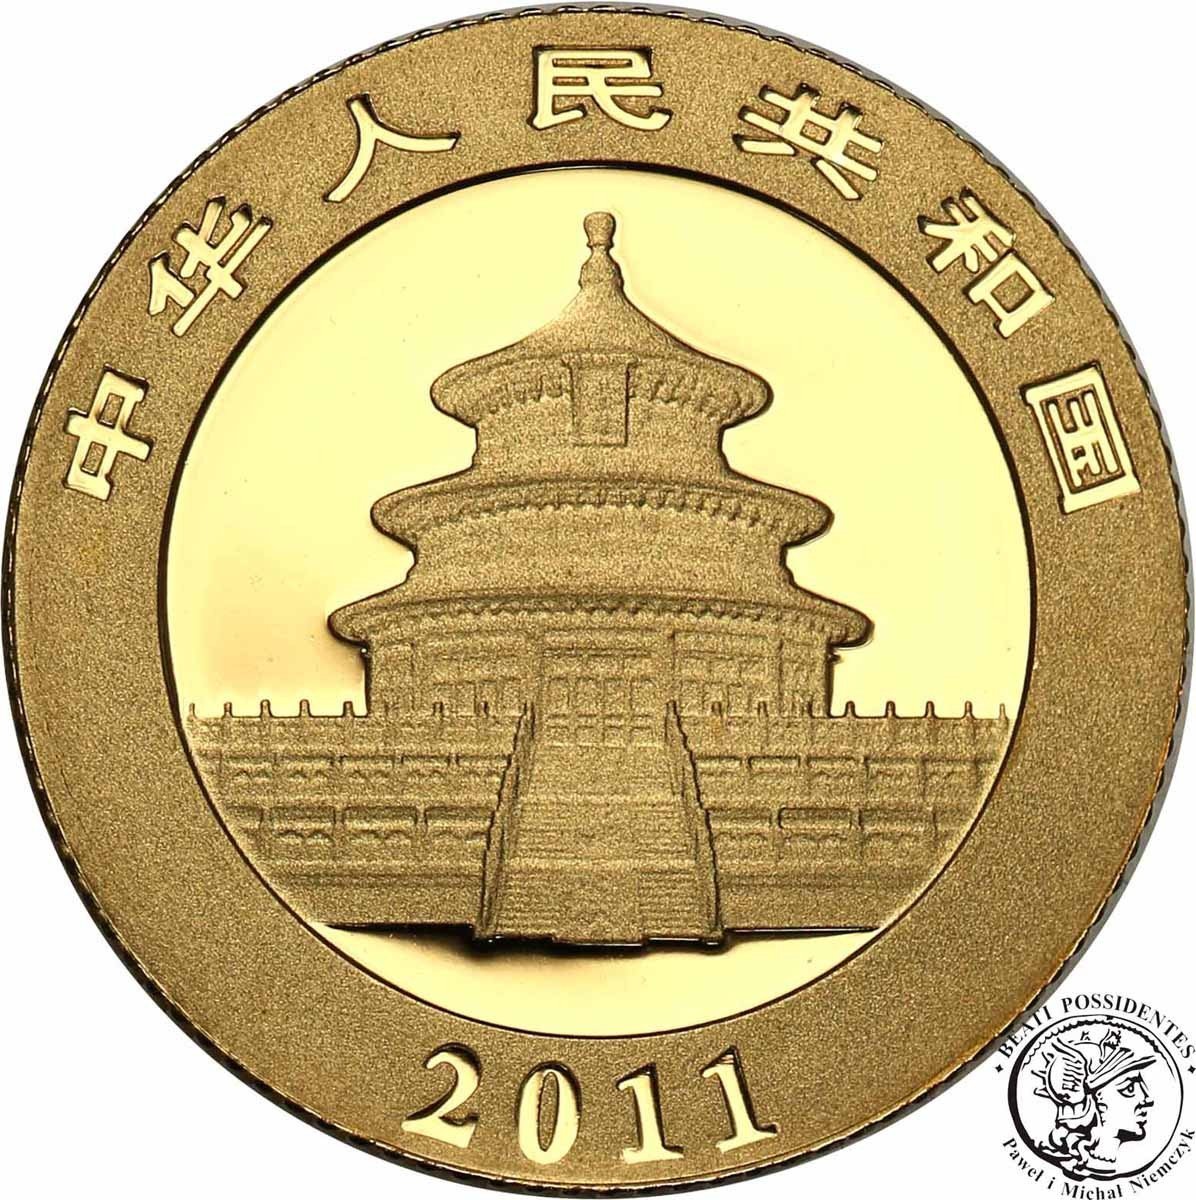 Chiny 50 Yuan 2011 Panda 1/10 uncji złota st. L